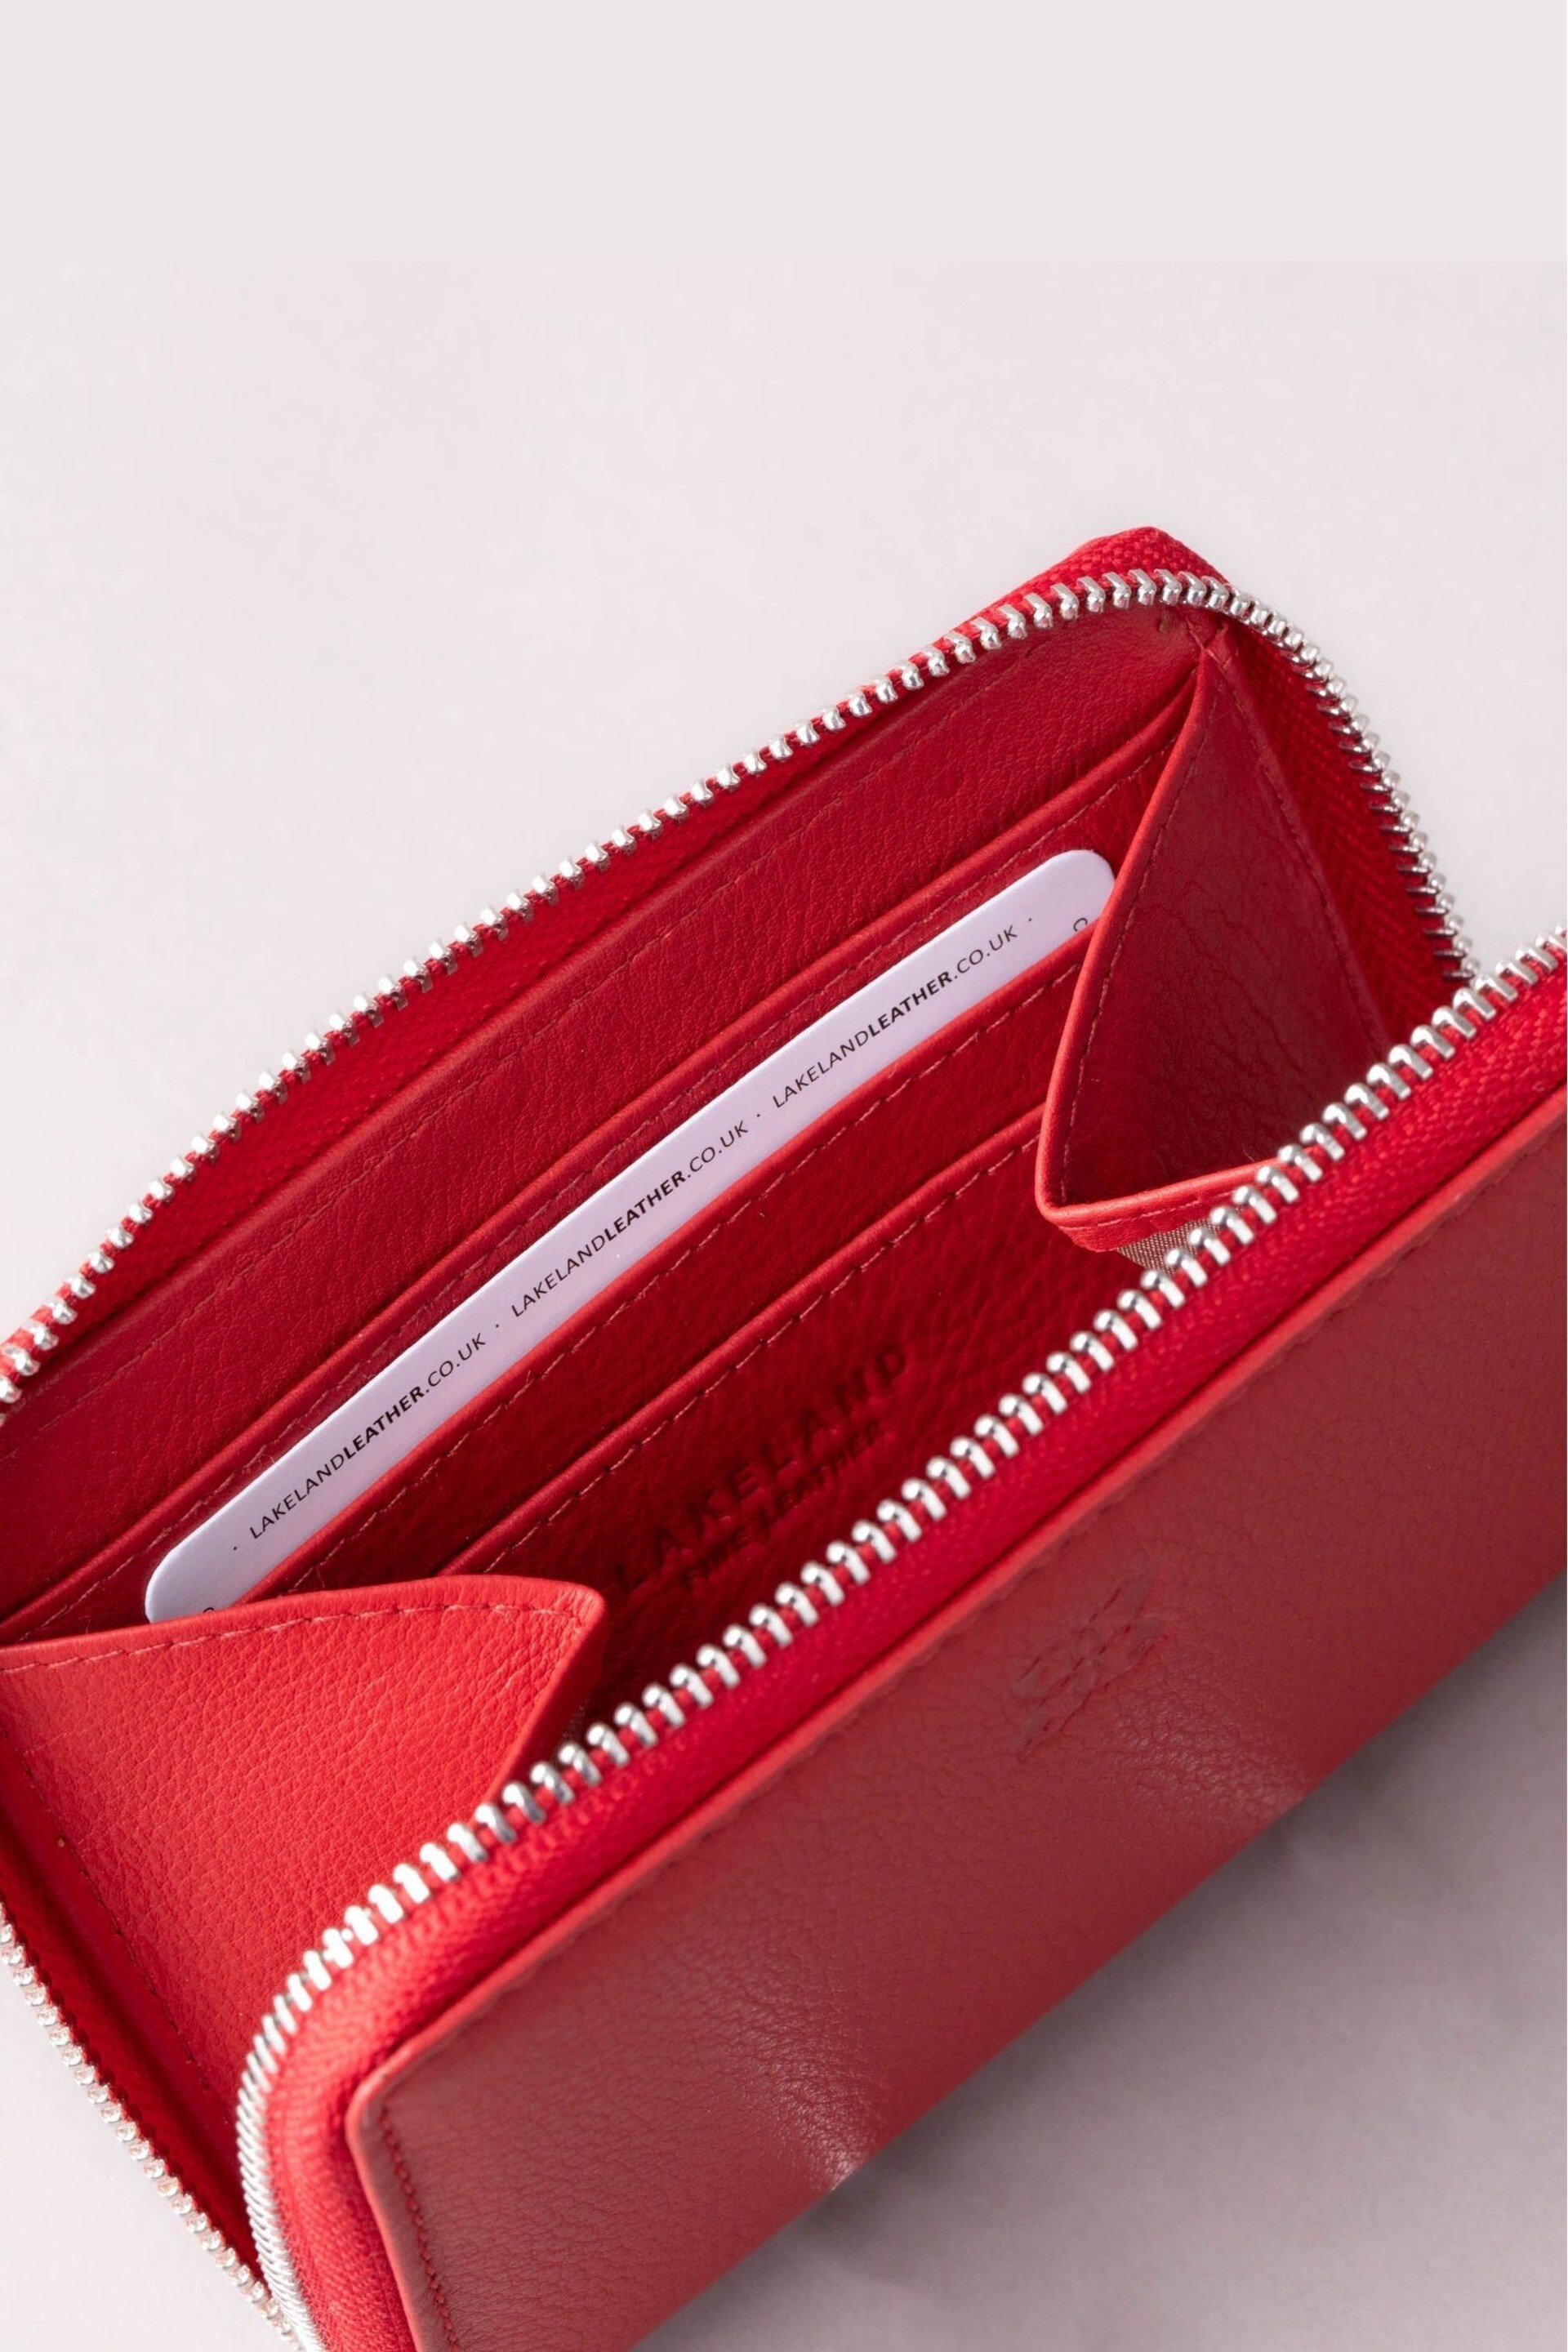 Lakeland Leather Red Chrome Large Leather Zip Purse - Image 3 of 5